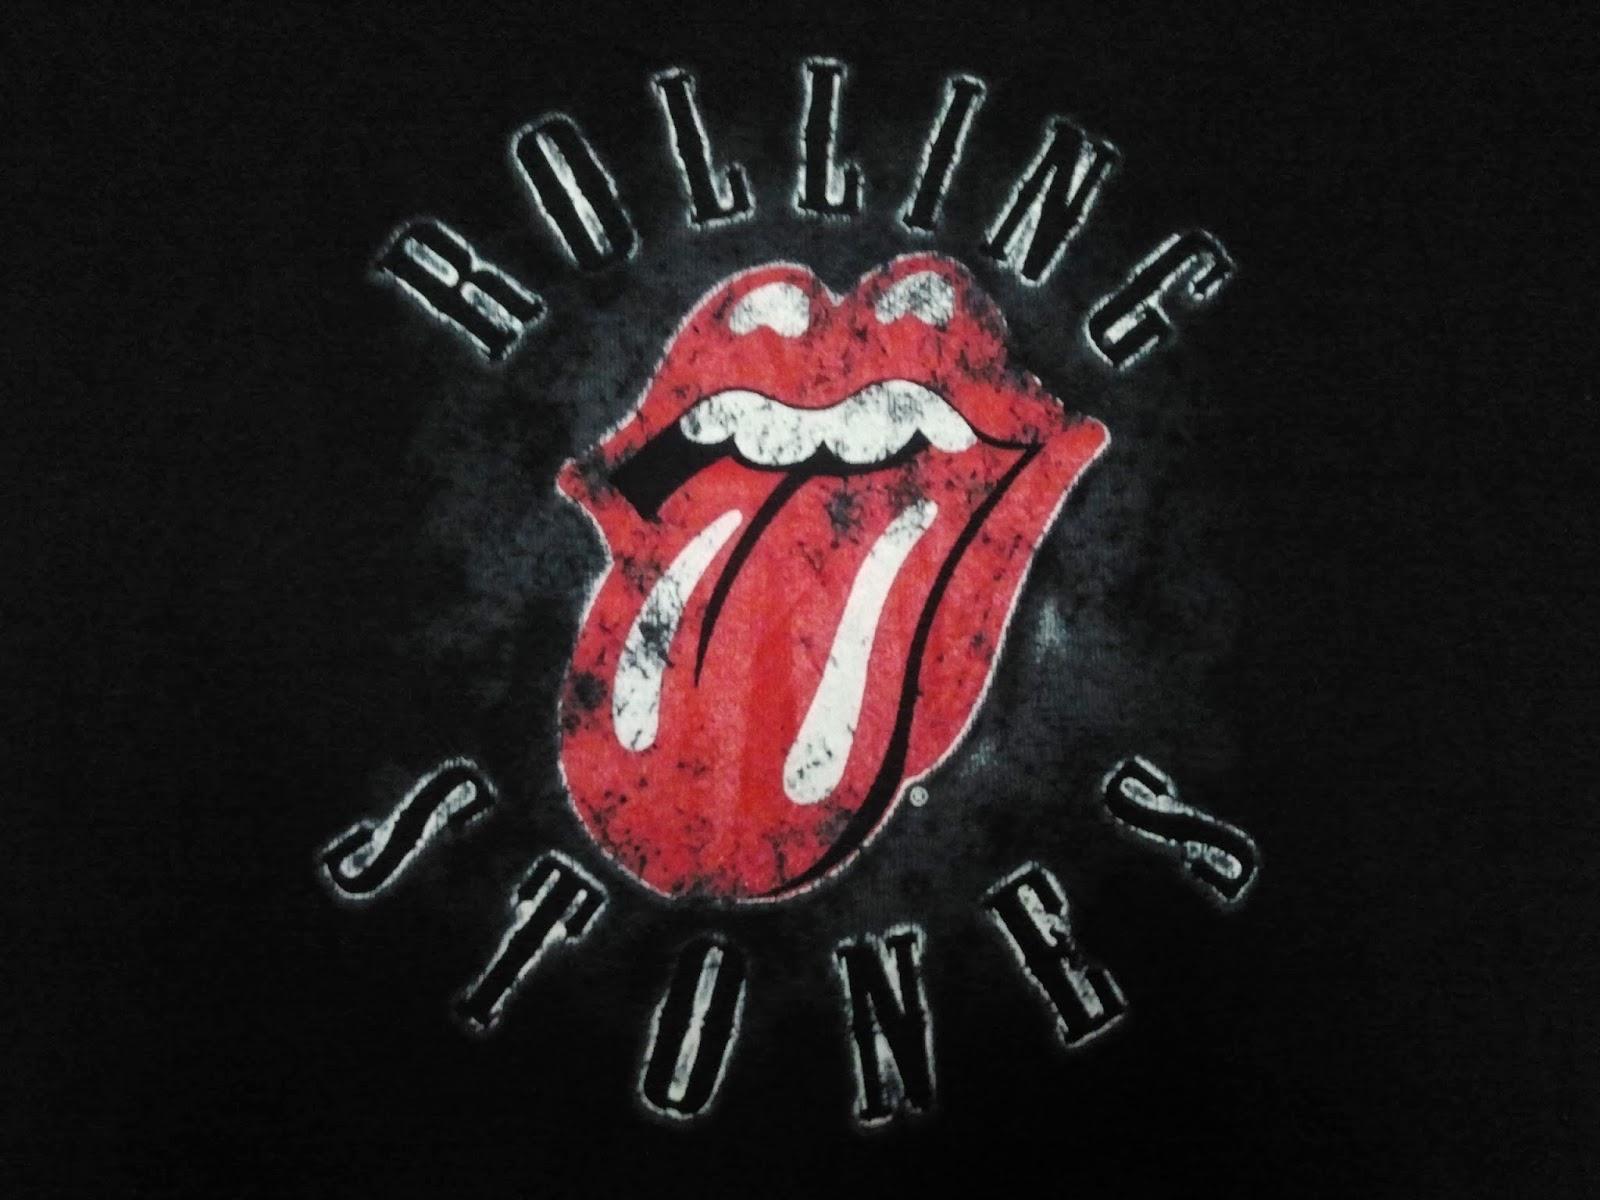 Rolling Stones Logo Wallpaper. (58++ Wallpaper)